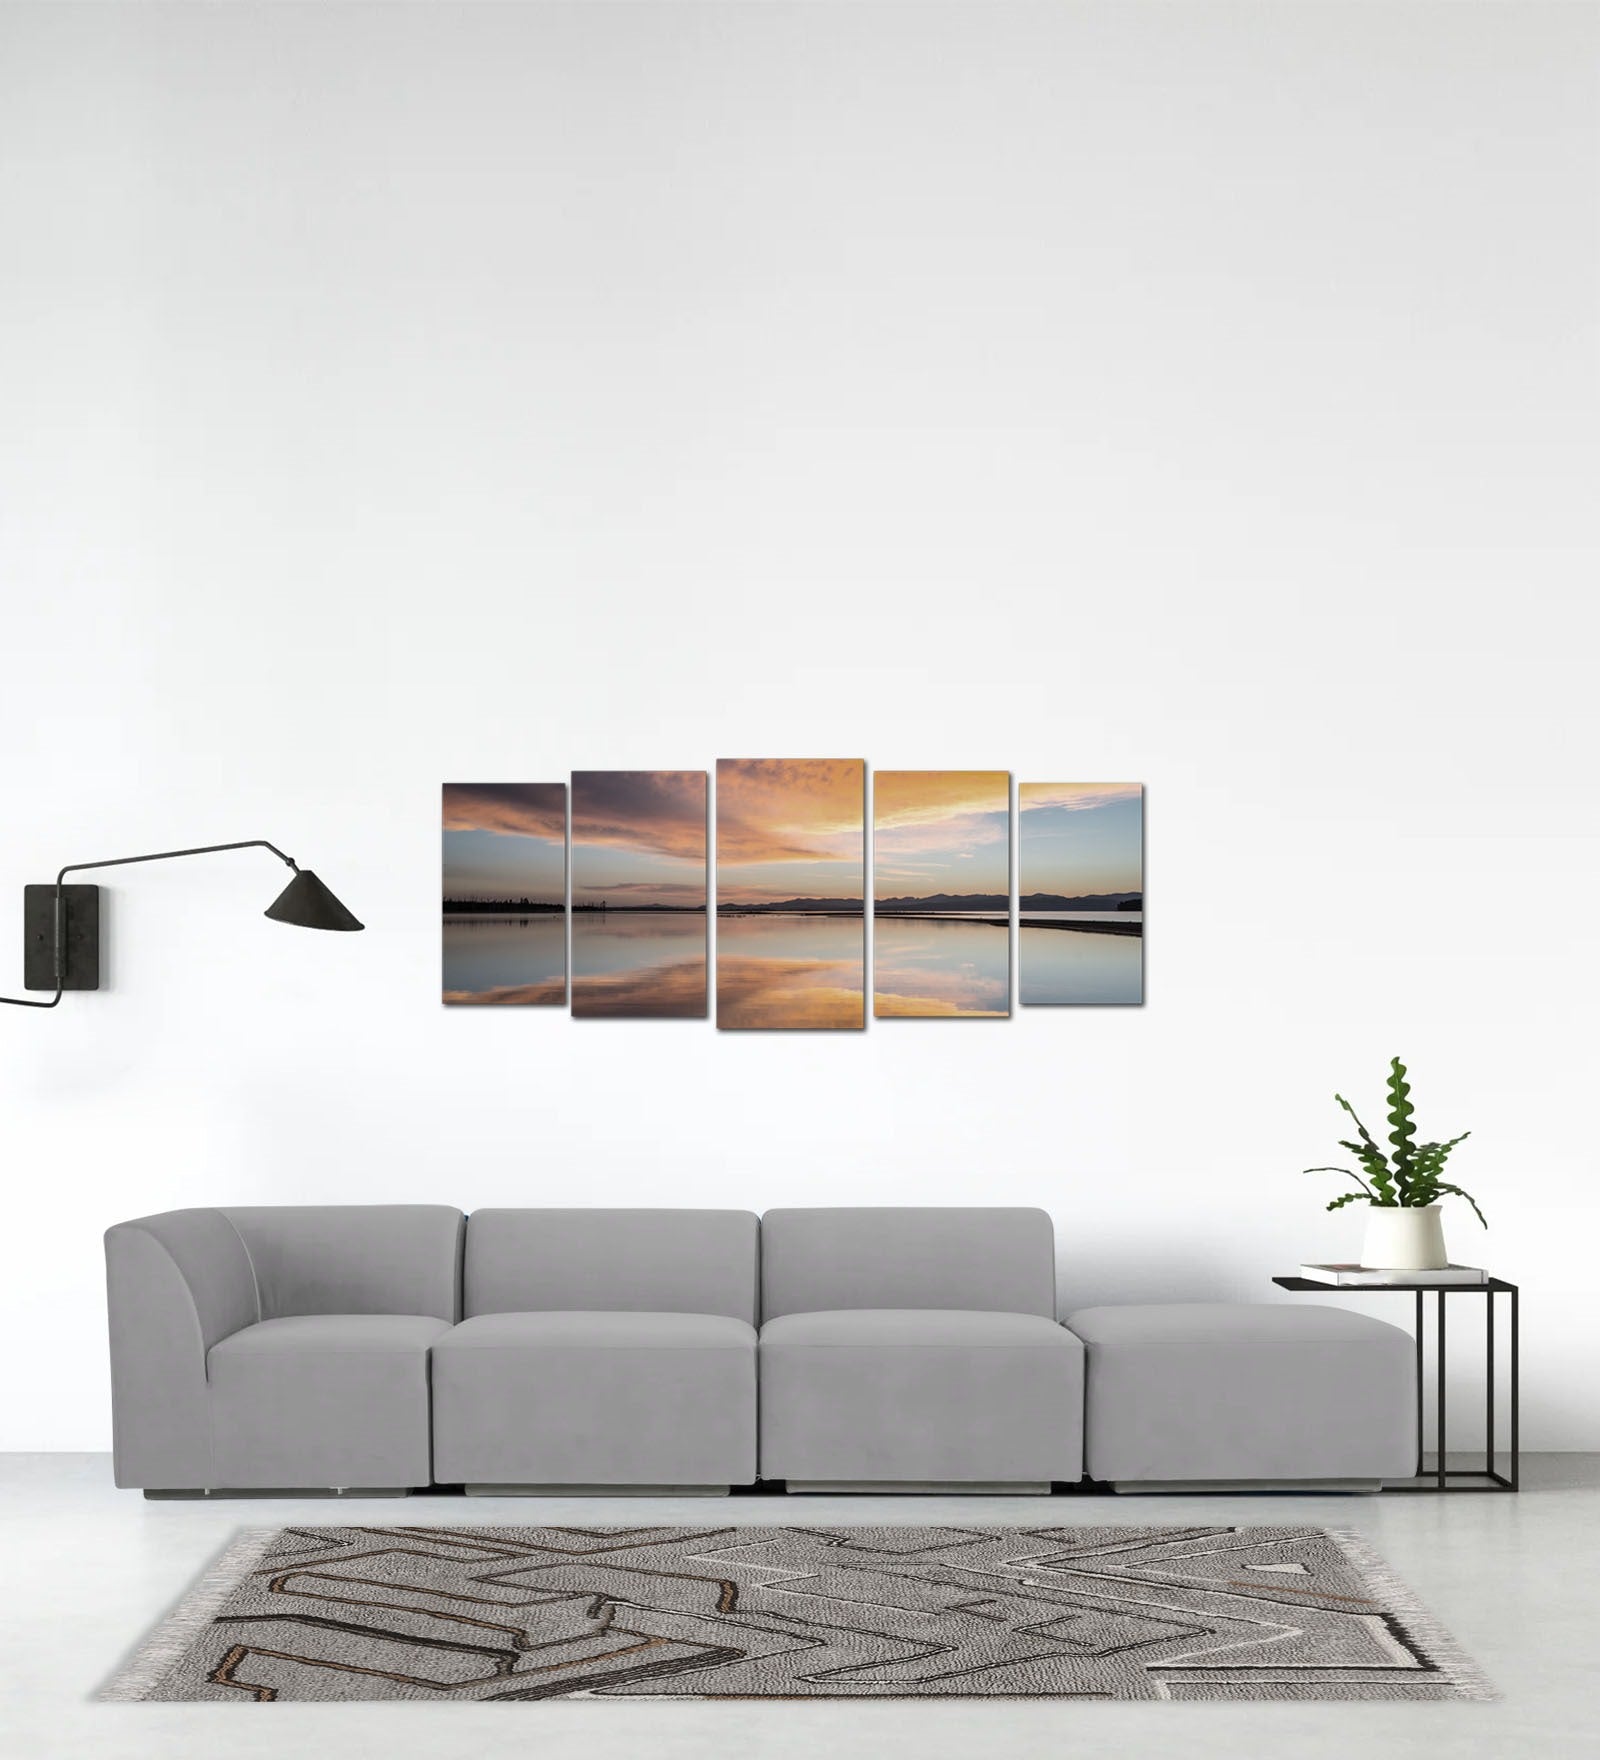 Bufa Velvet RHS Sectional Sofa In Light Grey Colour With Ottoman